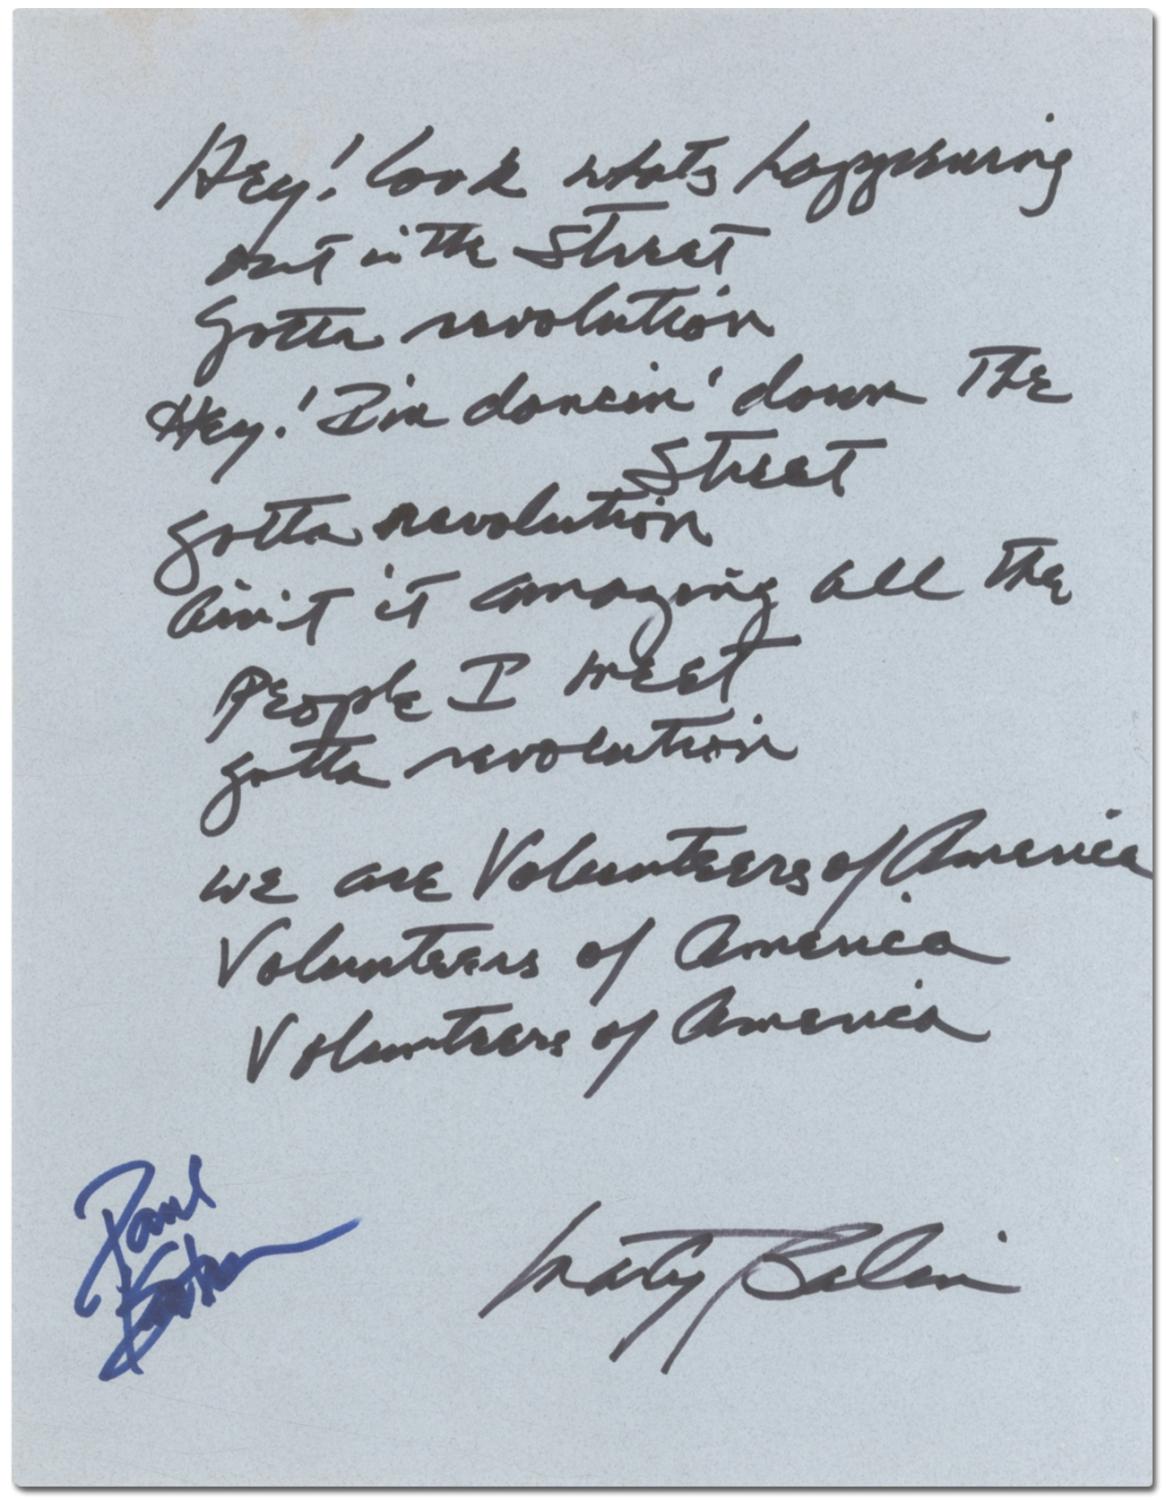 Handwritten Lyrics for "Volunteers" and Jefferson Starship's "Miracles